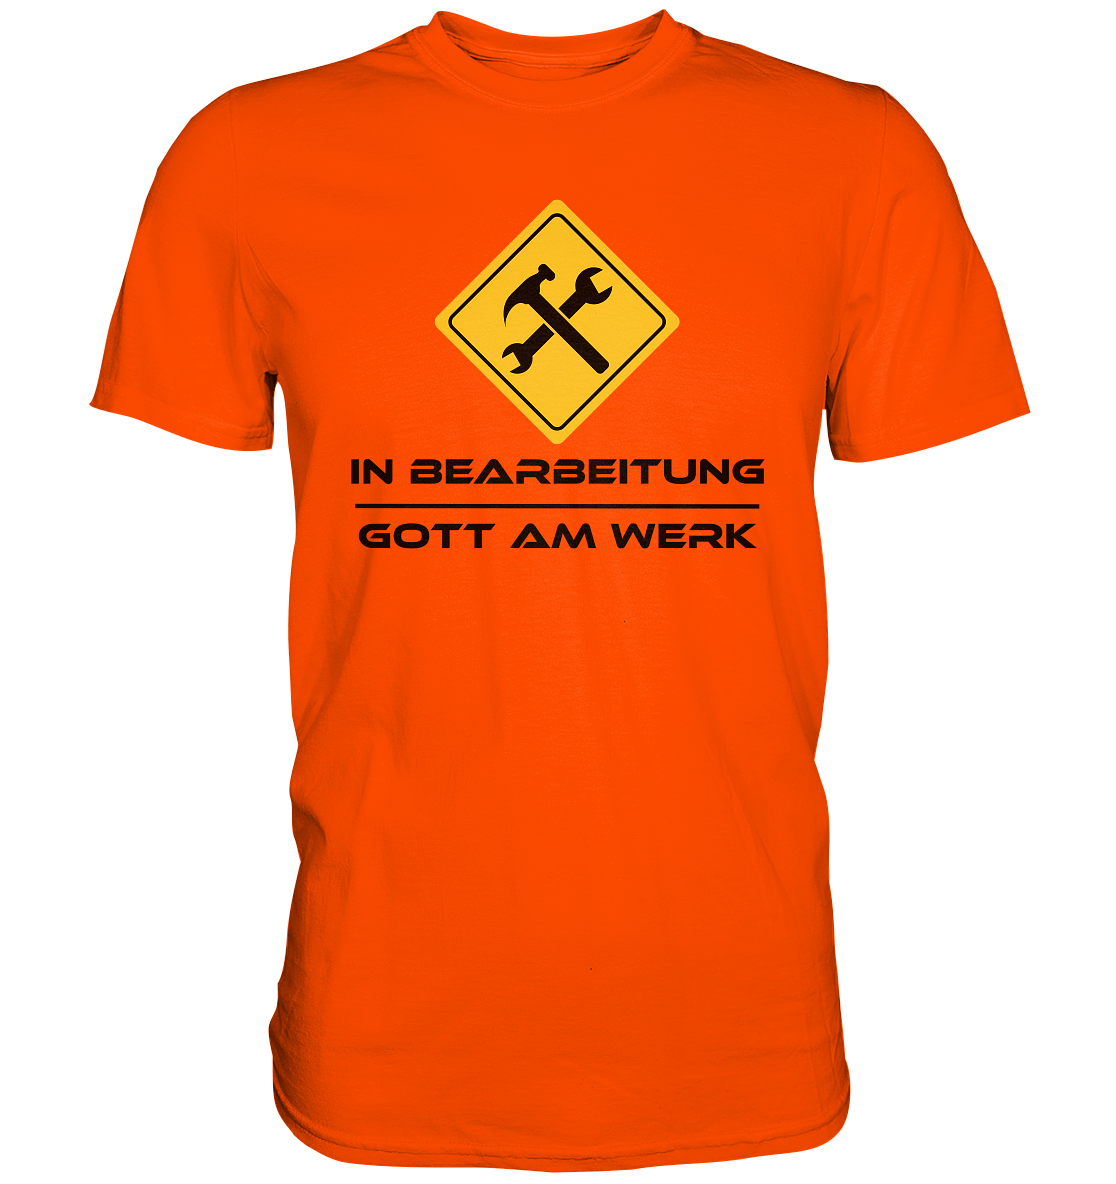 In Bearbeitung - Gott am Werk - Premium Shirt